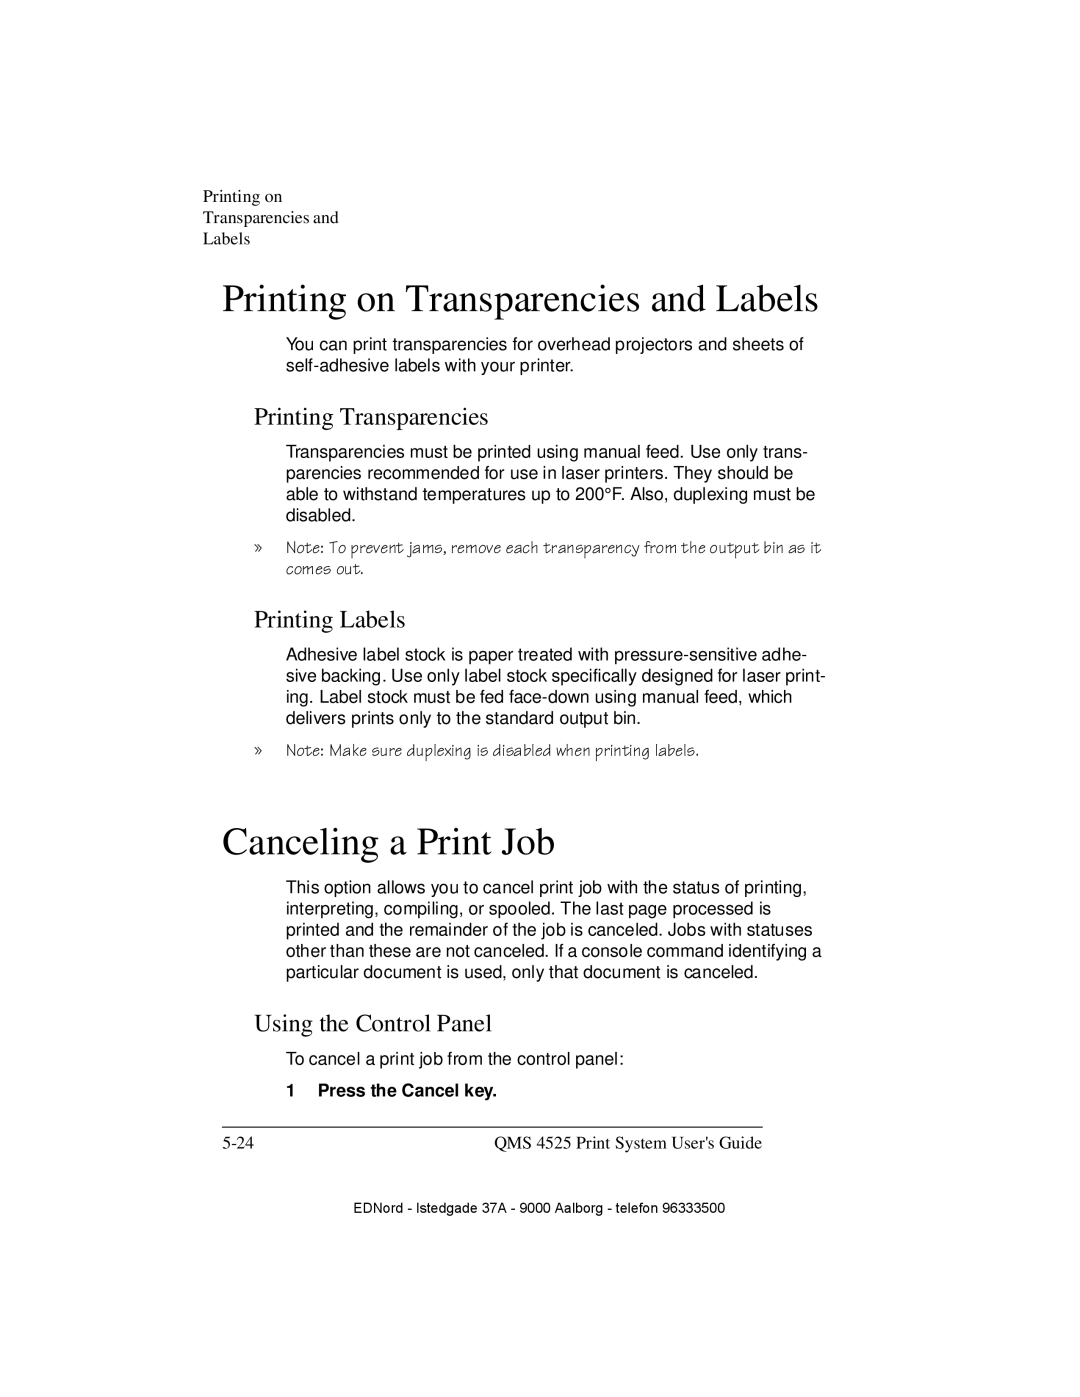 IBM QMS 4525 manual Printing on Transparencies and Labels, Canceling a Print Job, Printing Transparencies, Printing Labels 